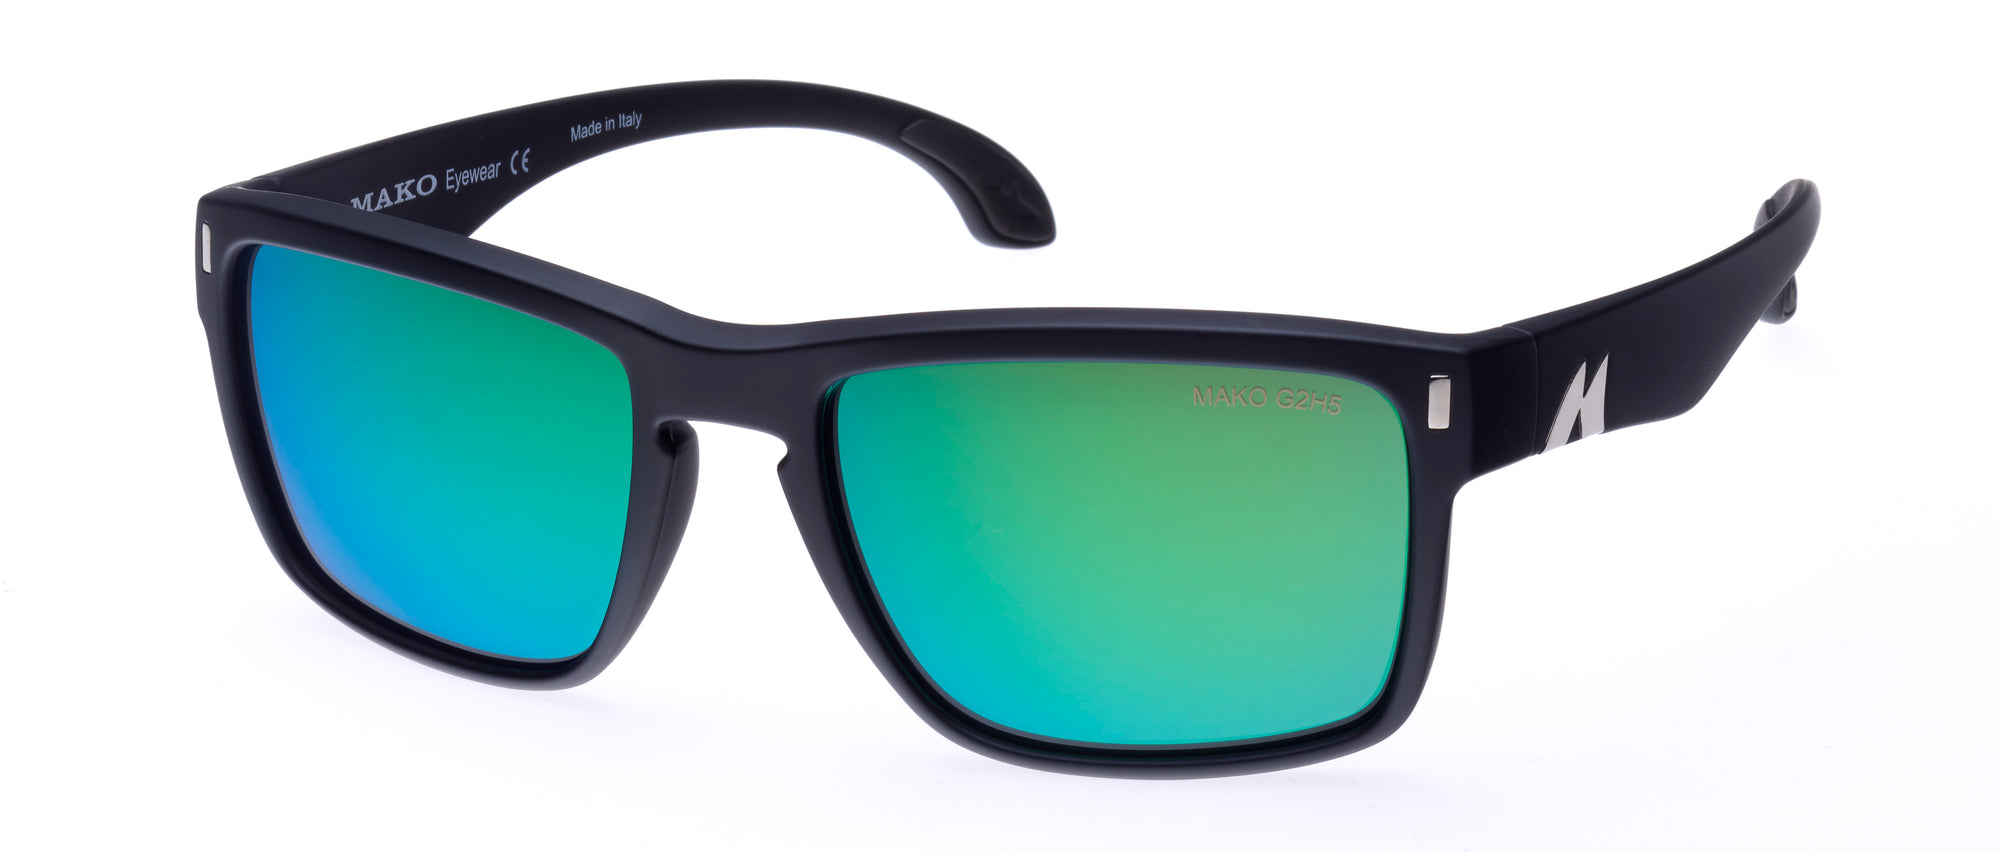 Mako GT 9583 Sunglasses - Matte Black Frame, HD Glass Rose Green Mirror Lense